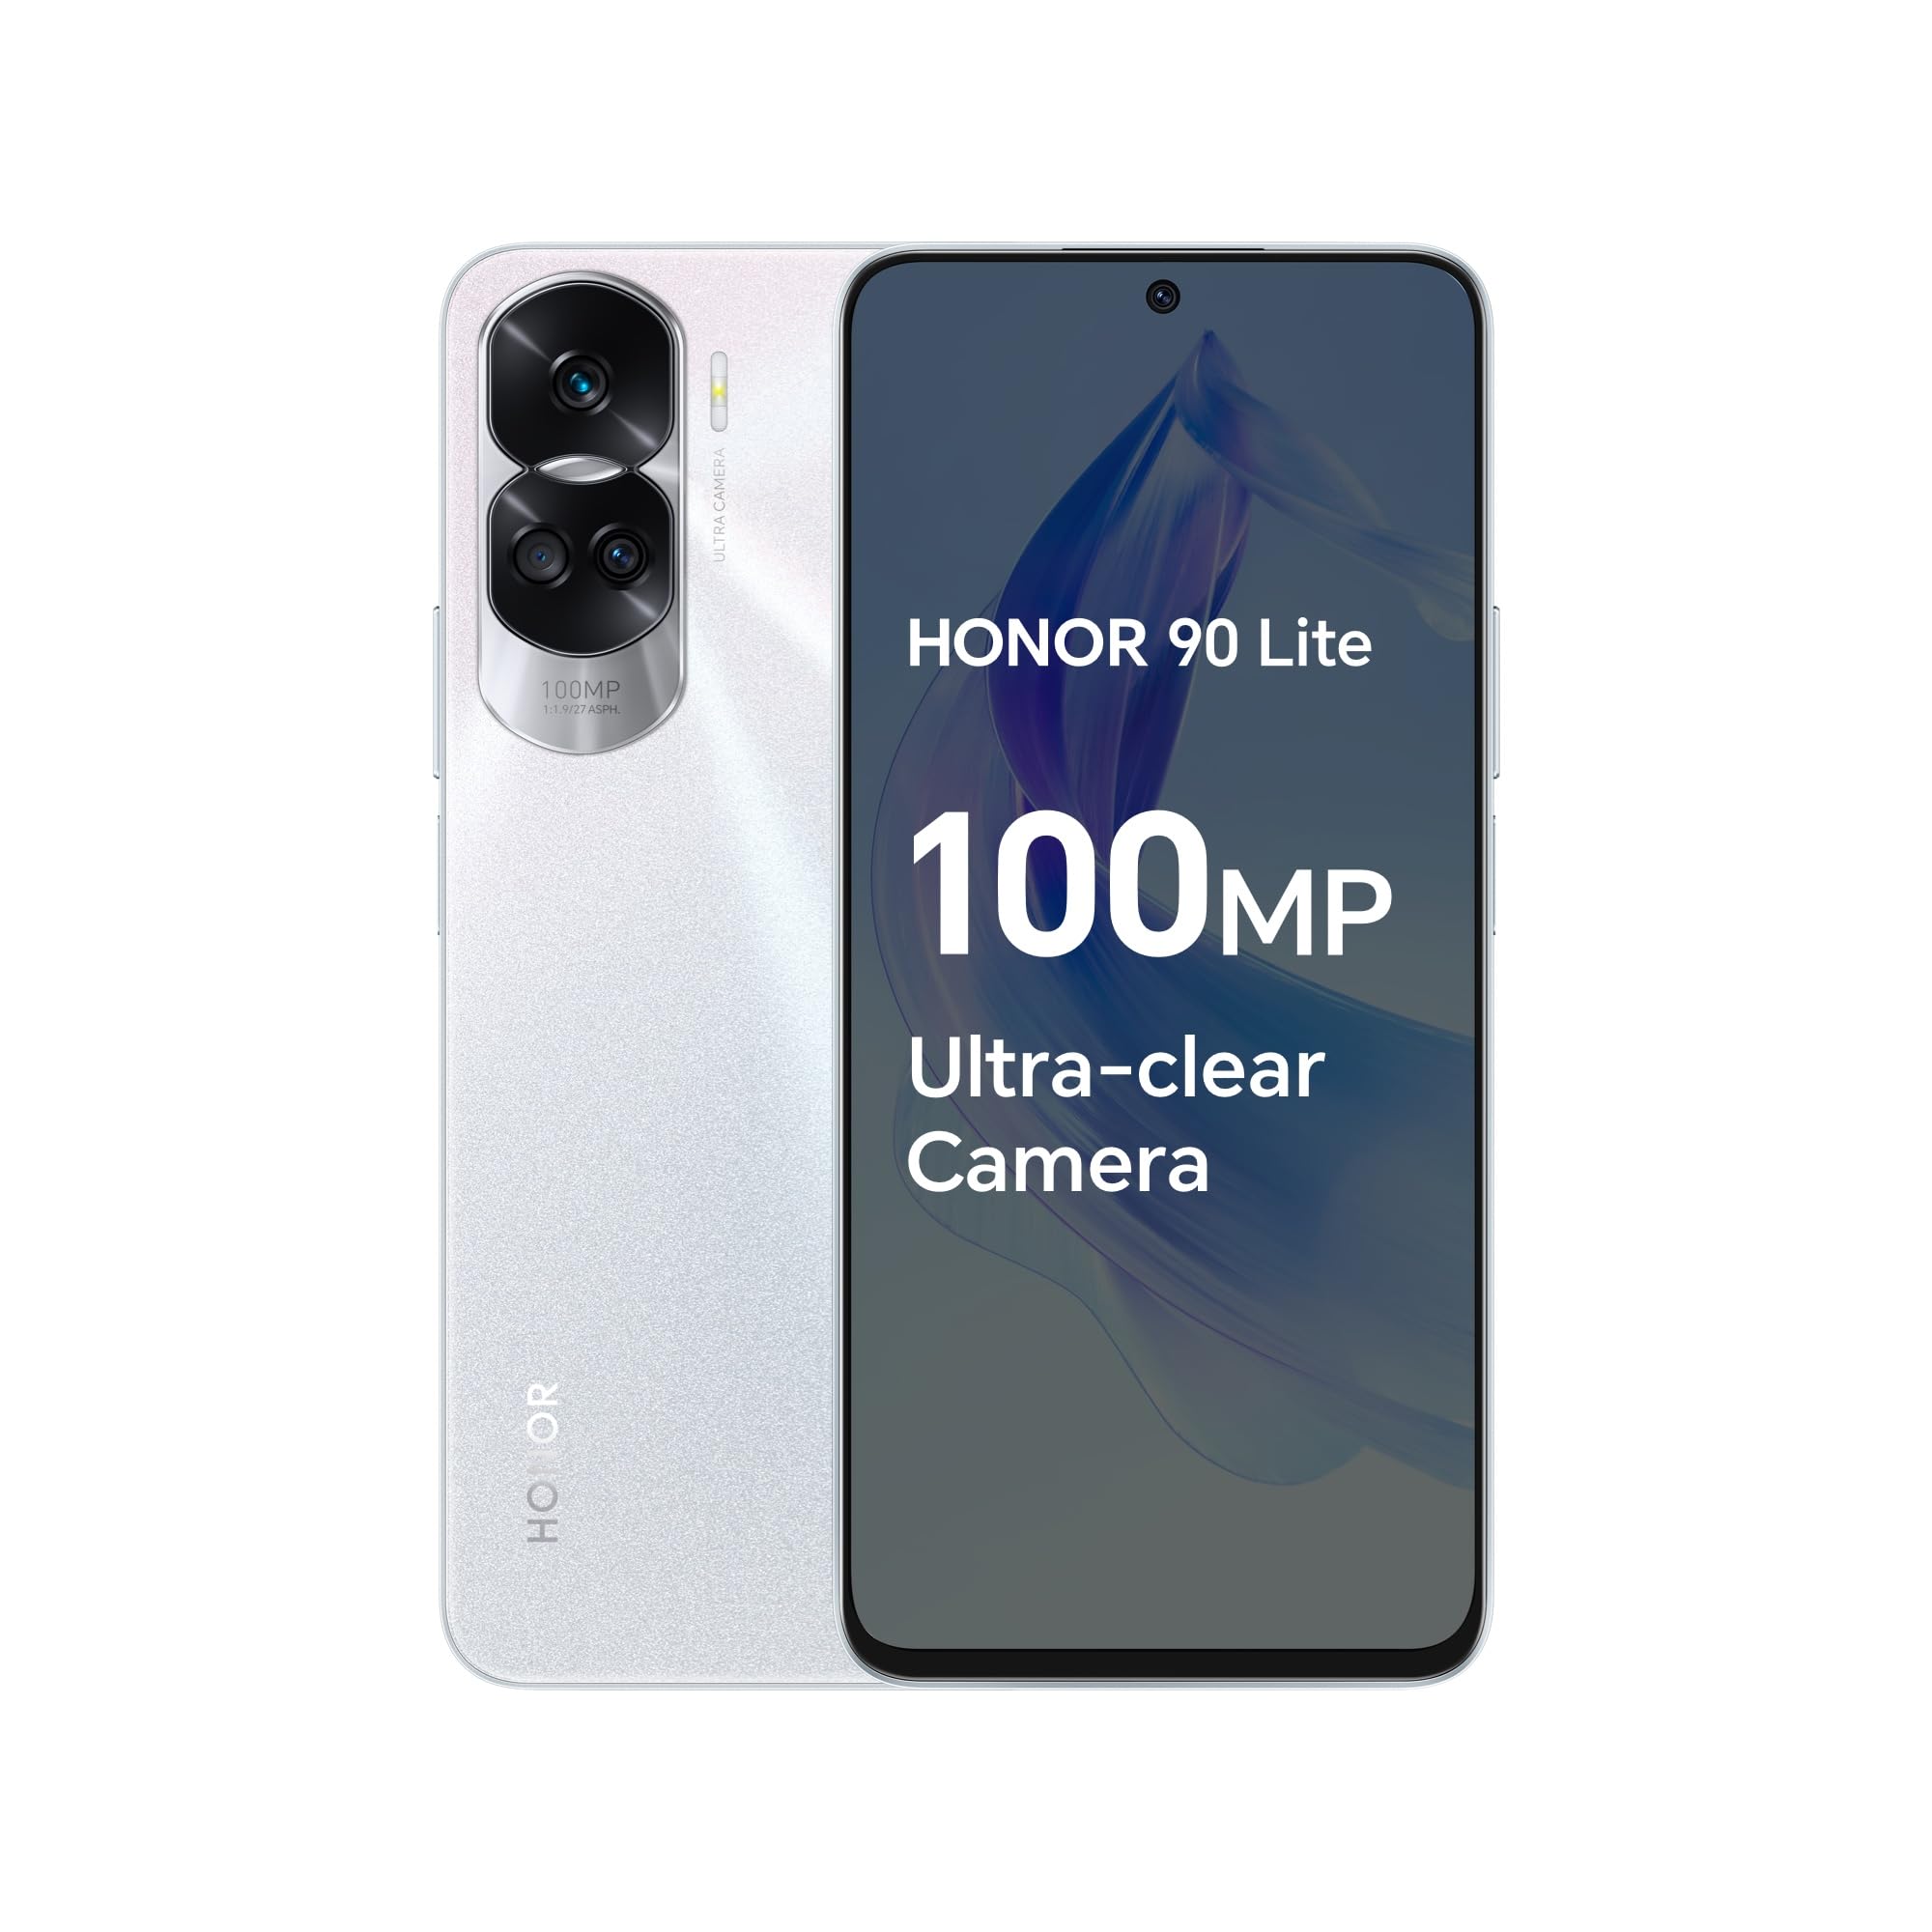 Honor 90 Lite Dual-SIM 256GB ROM + 8GB RAM (Only GSM | No CDMA) Factory Unlocked 5G Smartphone (Titanium Silver) - International Version